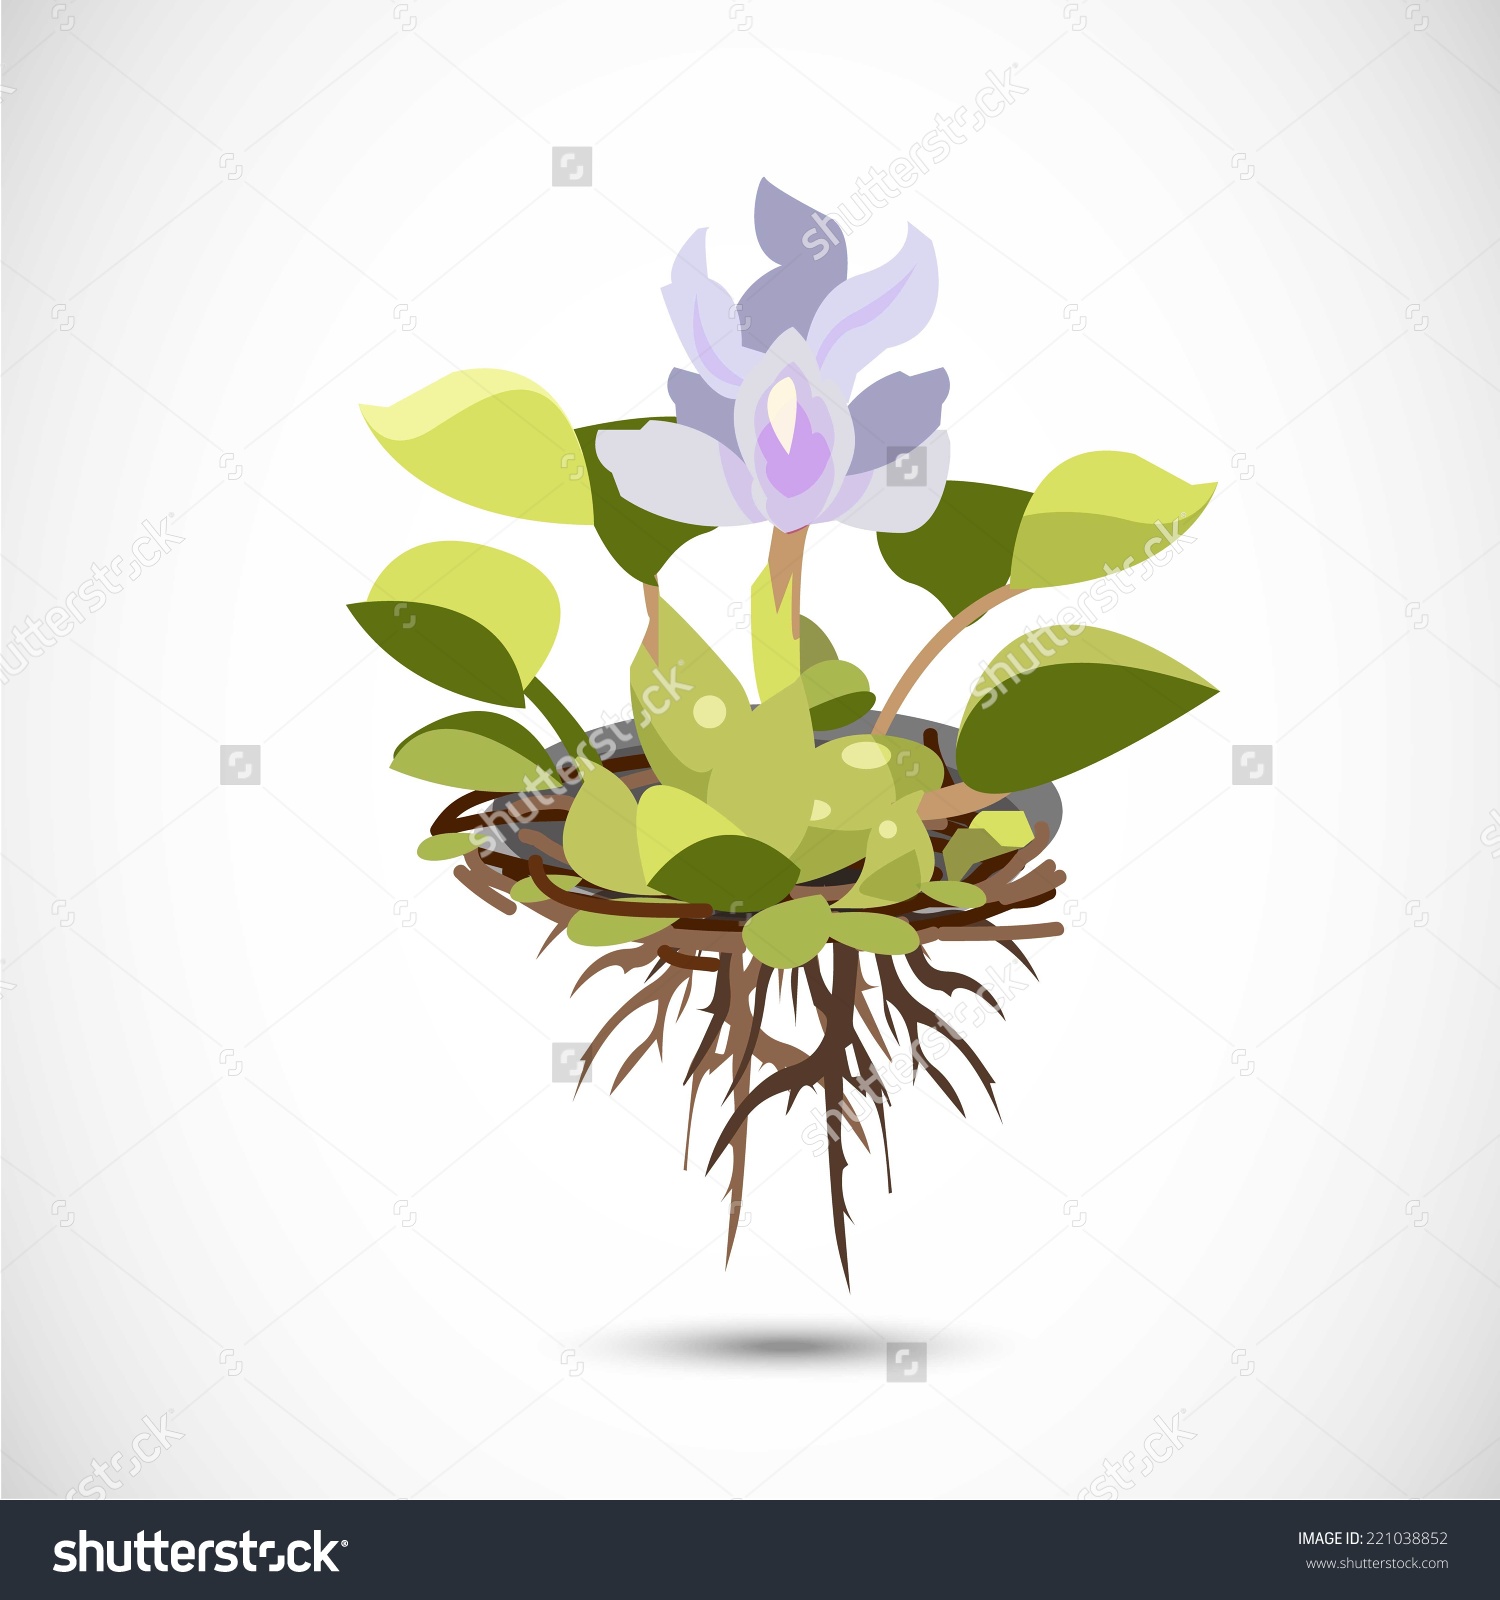 Water Hyacinth Vector Illustration Stock Vector 221038852.